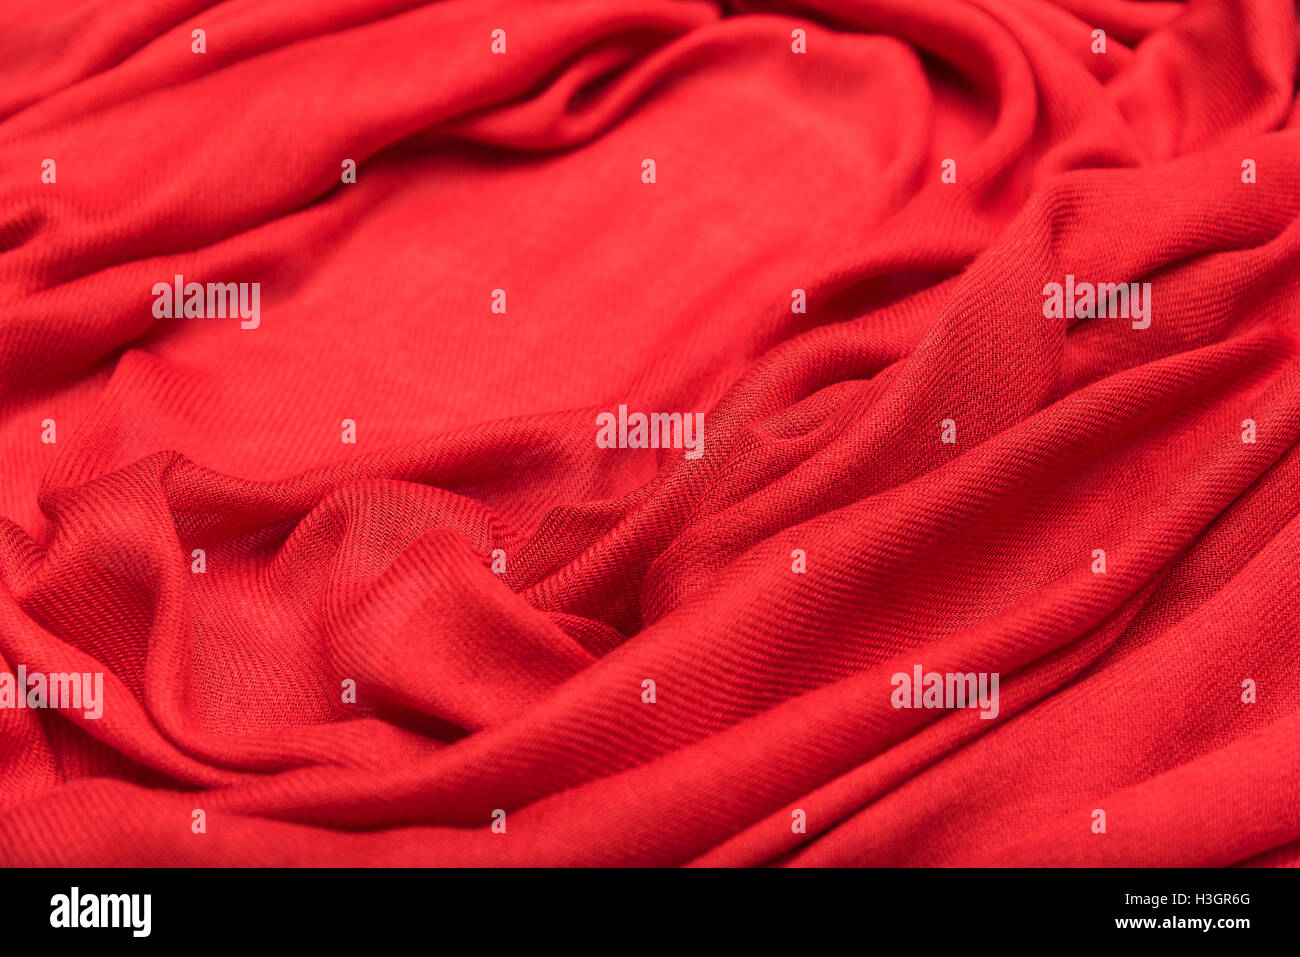 Alcantara fabric hi-res stock photography and images - Alamy